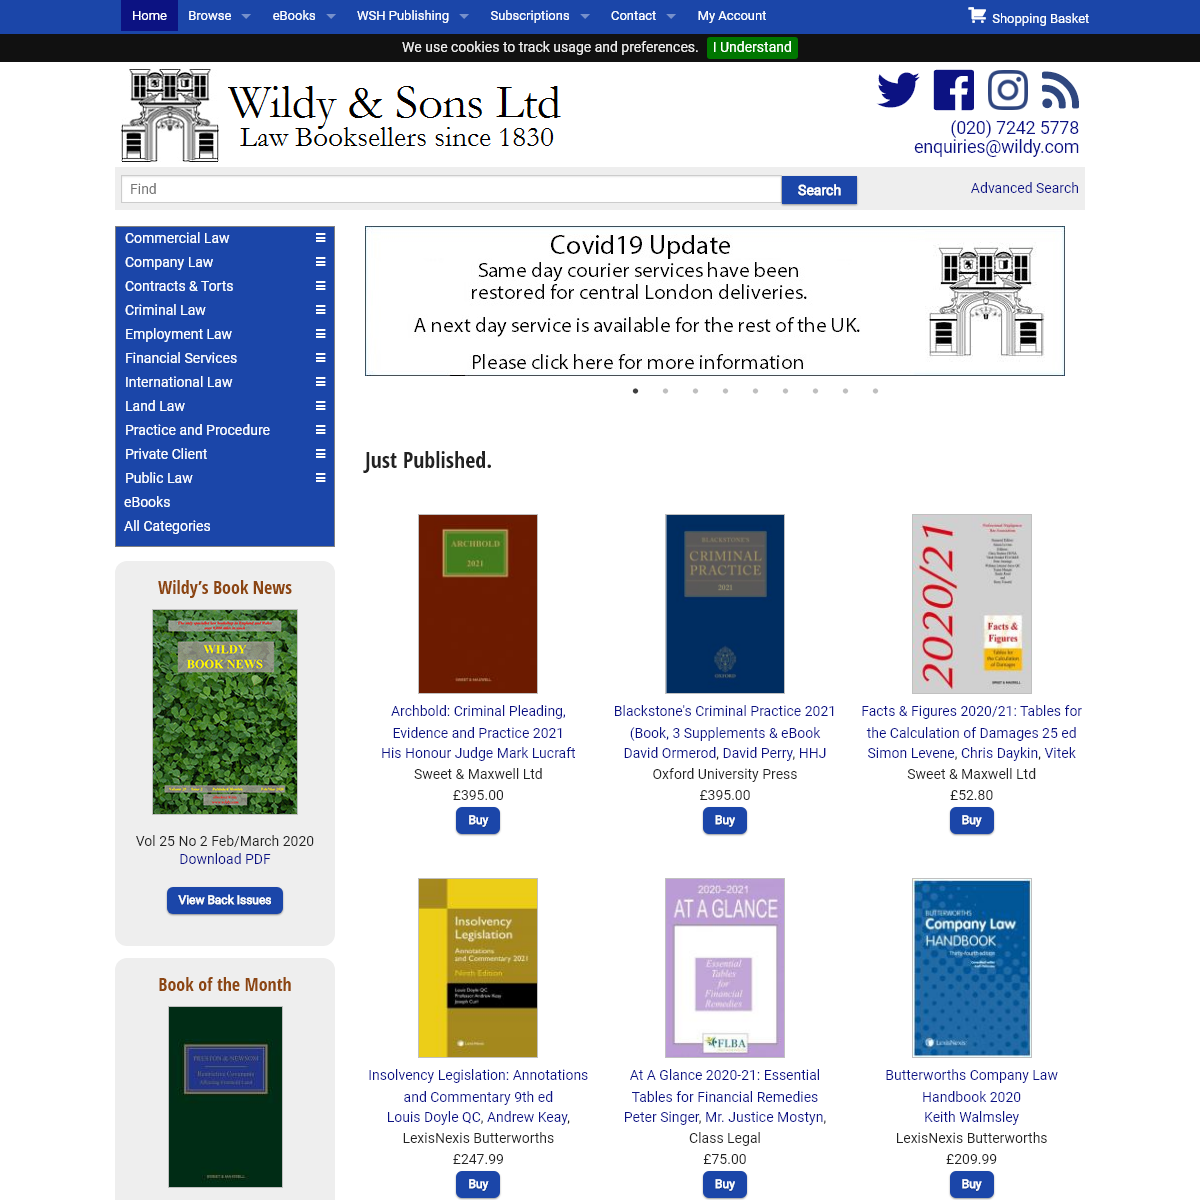 Wildy & Sons Ltd â€” The Worldâ€™s Legal Bookshop - Home